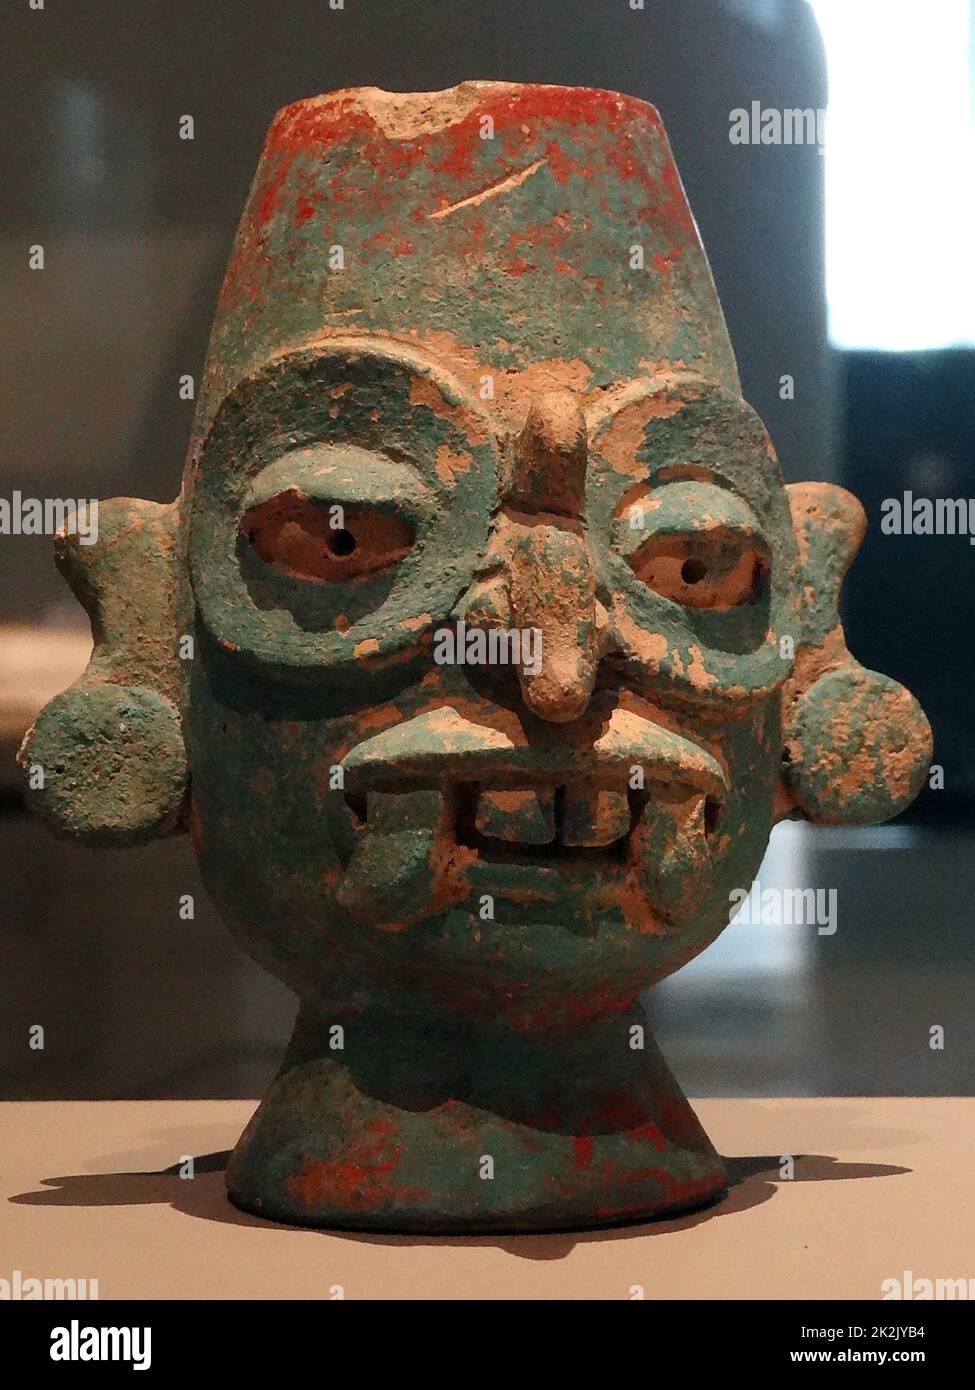 Ceramic vase depicting the Mayan rain deity, Chaac, Yucatan, Mexico. Dated 1250-1550 AD. Stock Photo